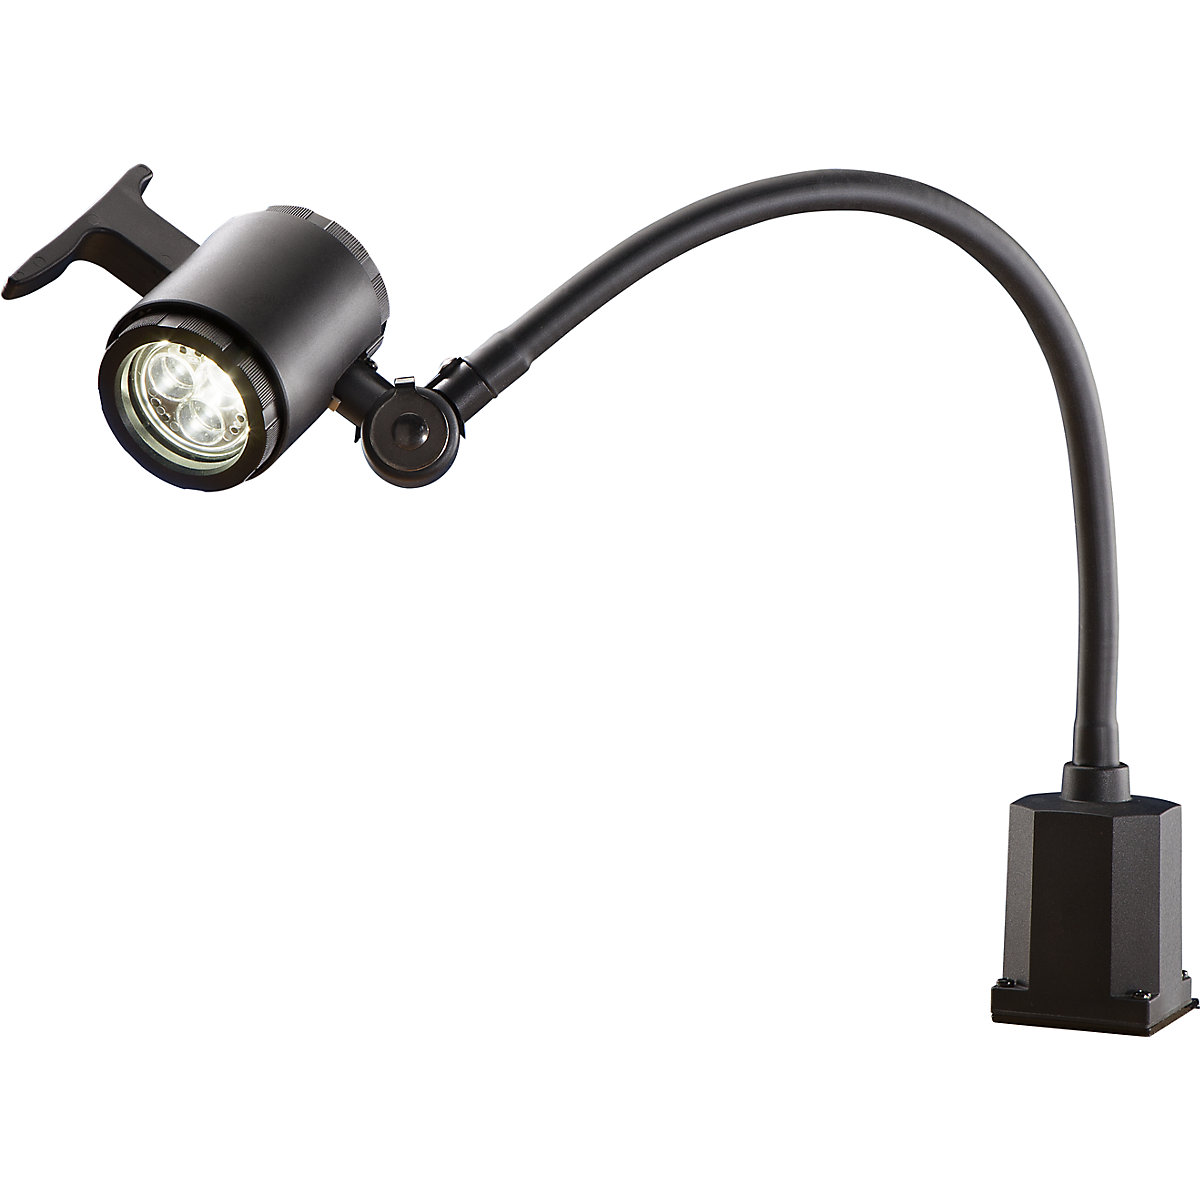 Flexible arm LED machine lamp IP65